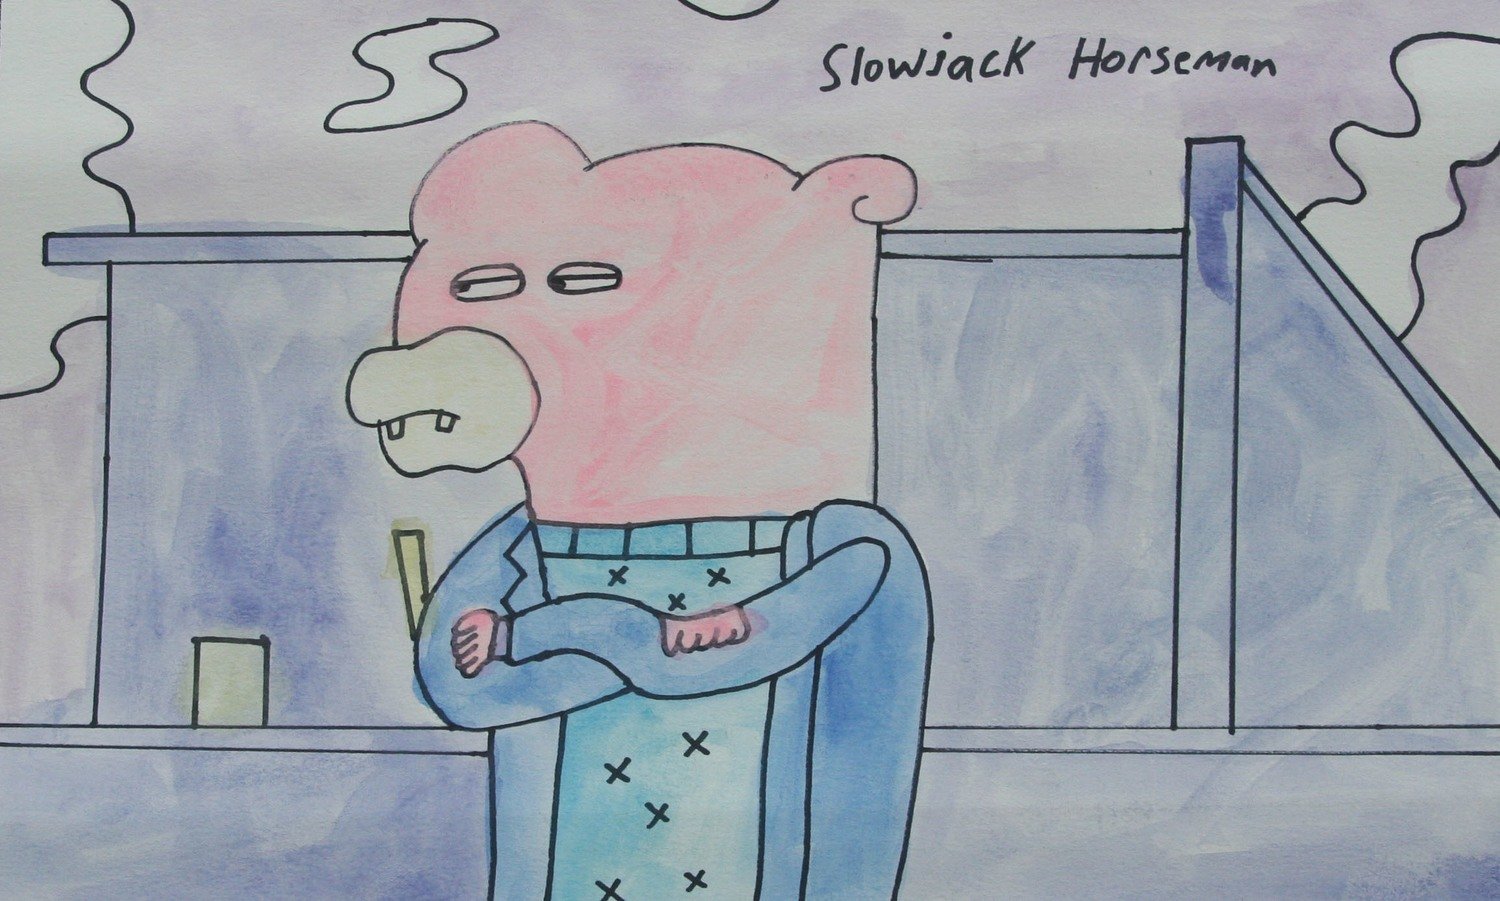 Slowjack Horseman